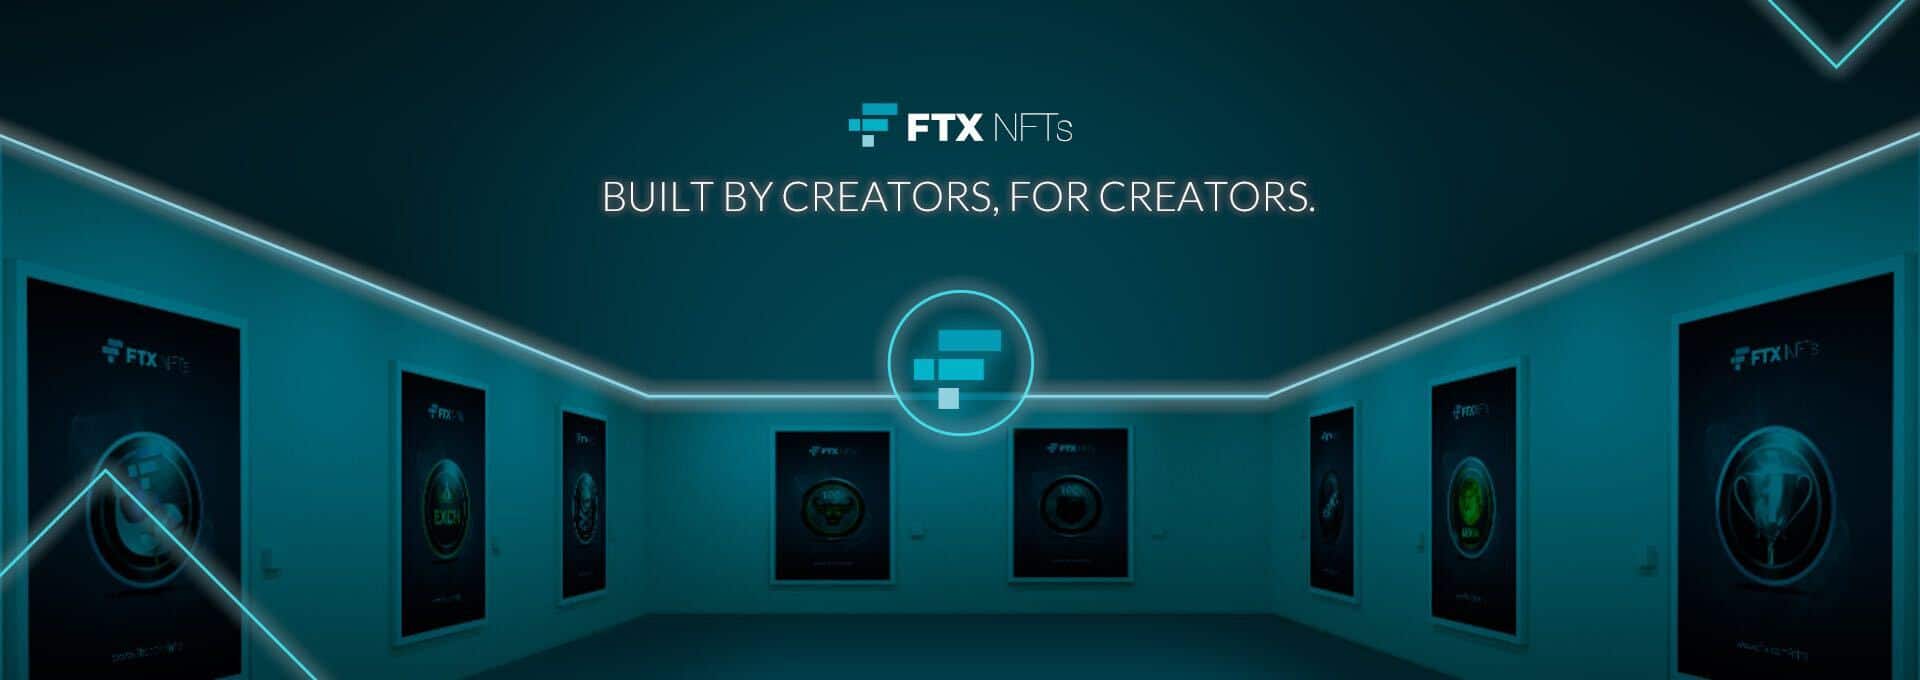 FTX NFT expanding its services